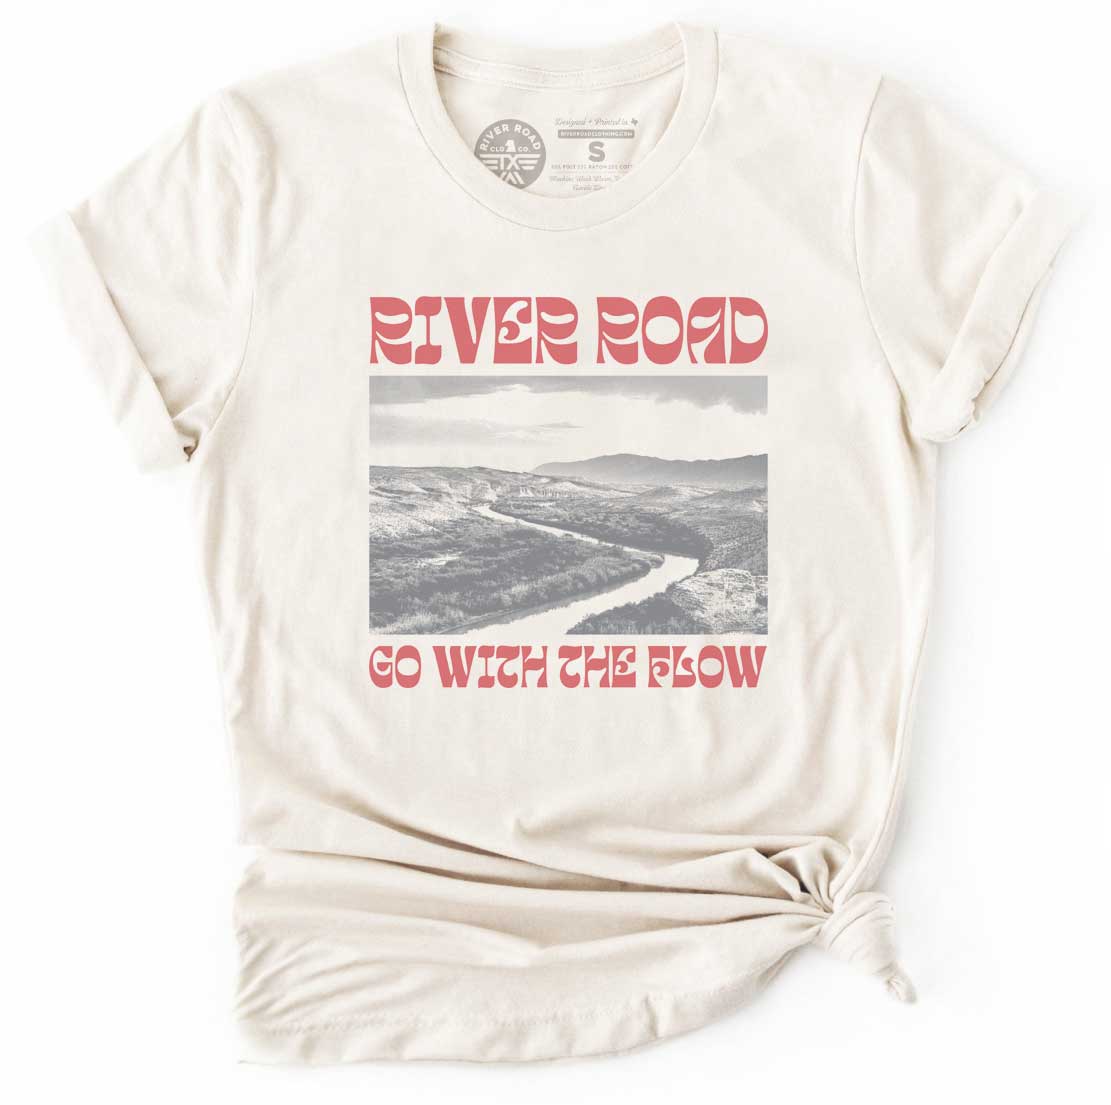 RIVER ROAD CLOTHING Shirts Rio Grande Go Flow